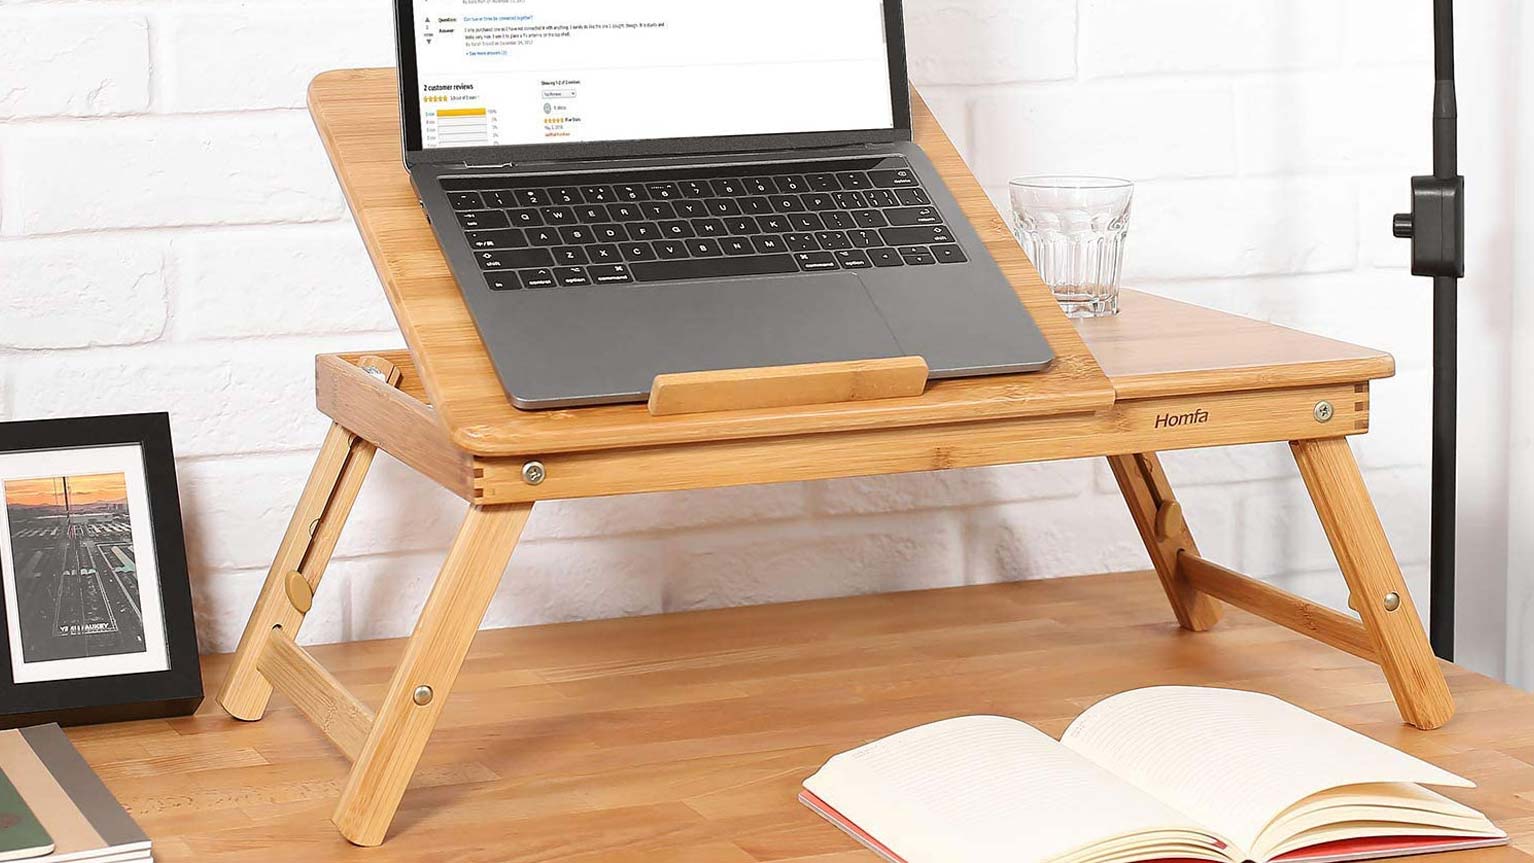 The best desks: HOMFA Bamboo Laptop Desk